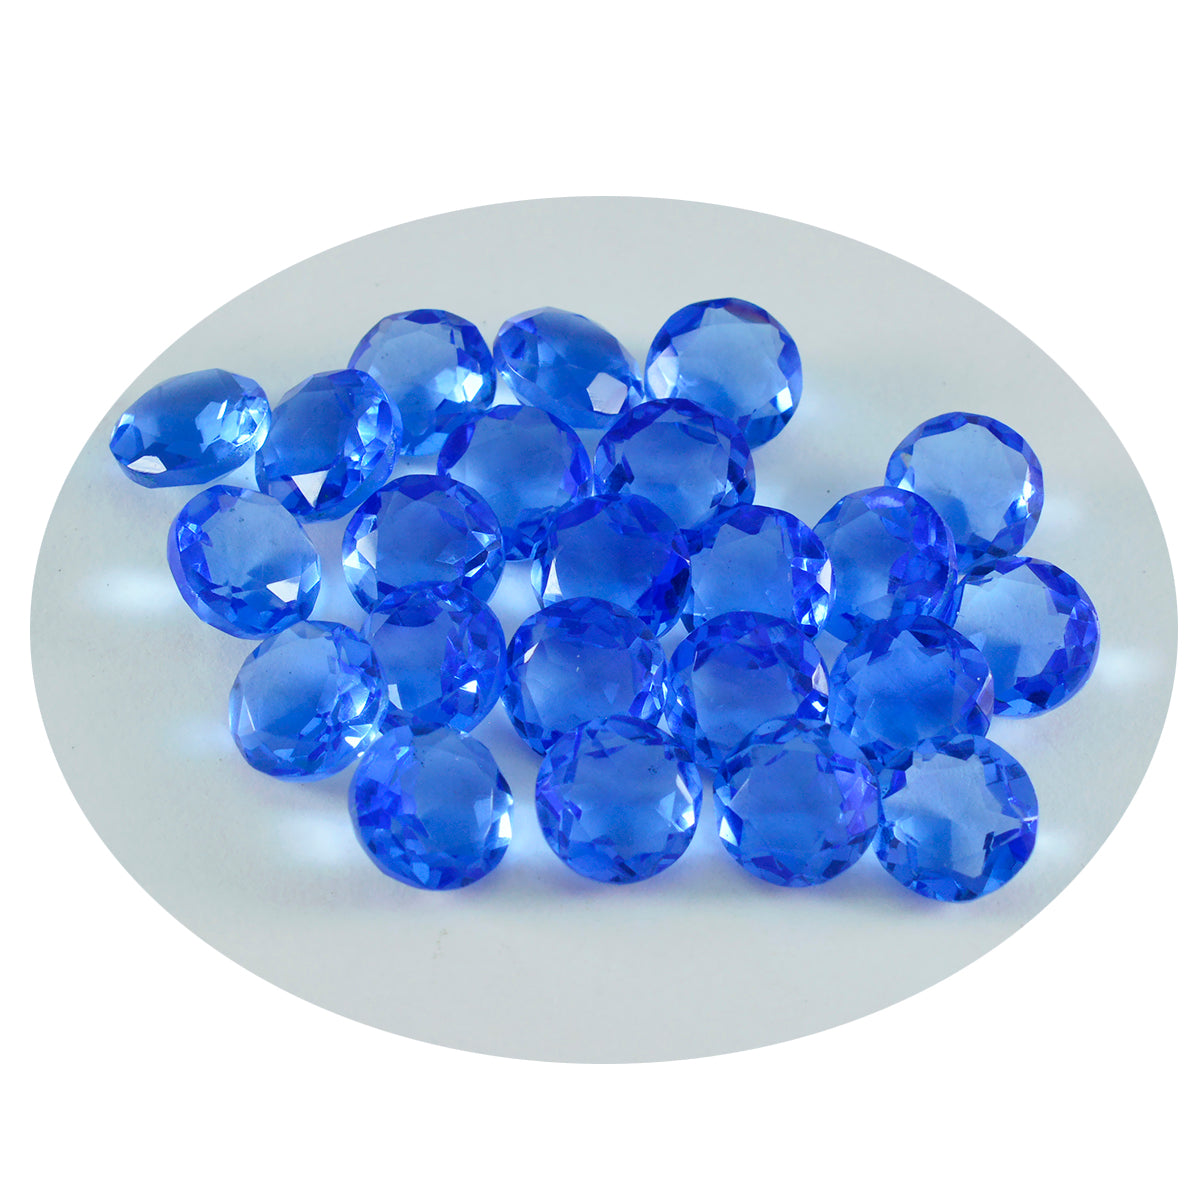 Riyogems 1 pieza de zafiro azul CZ facetado 6x6 mm forma redonda piedra preciosa de calidad dulce